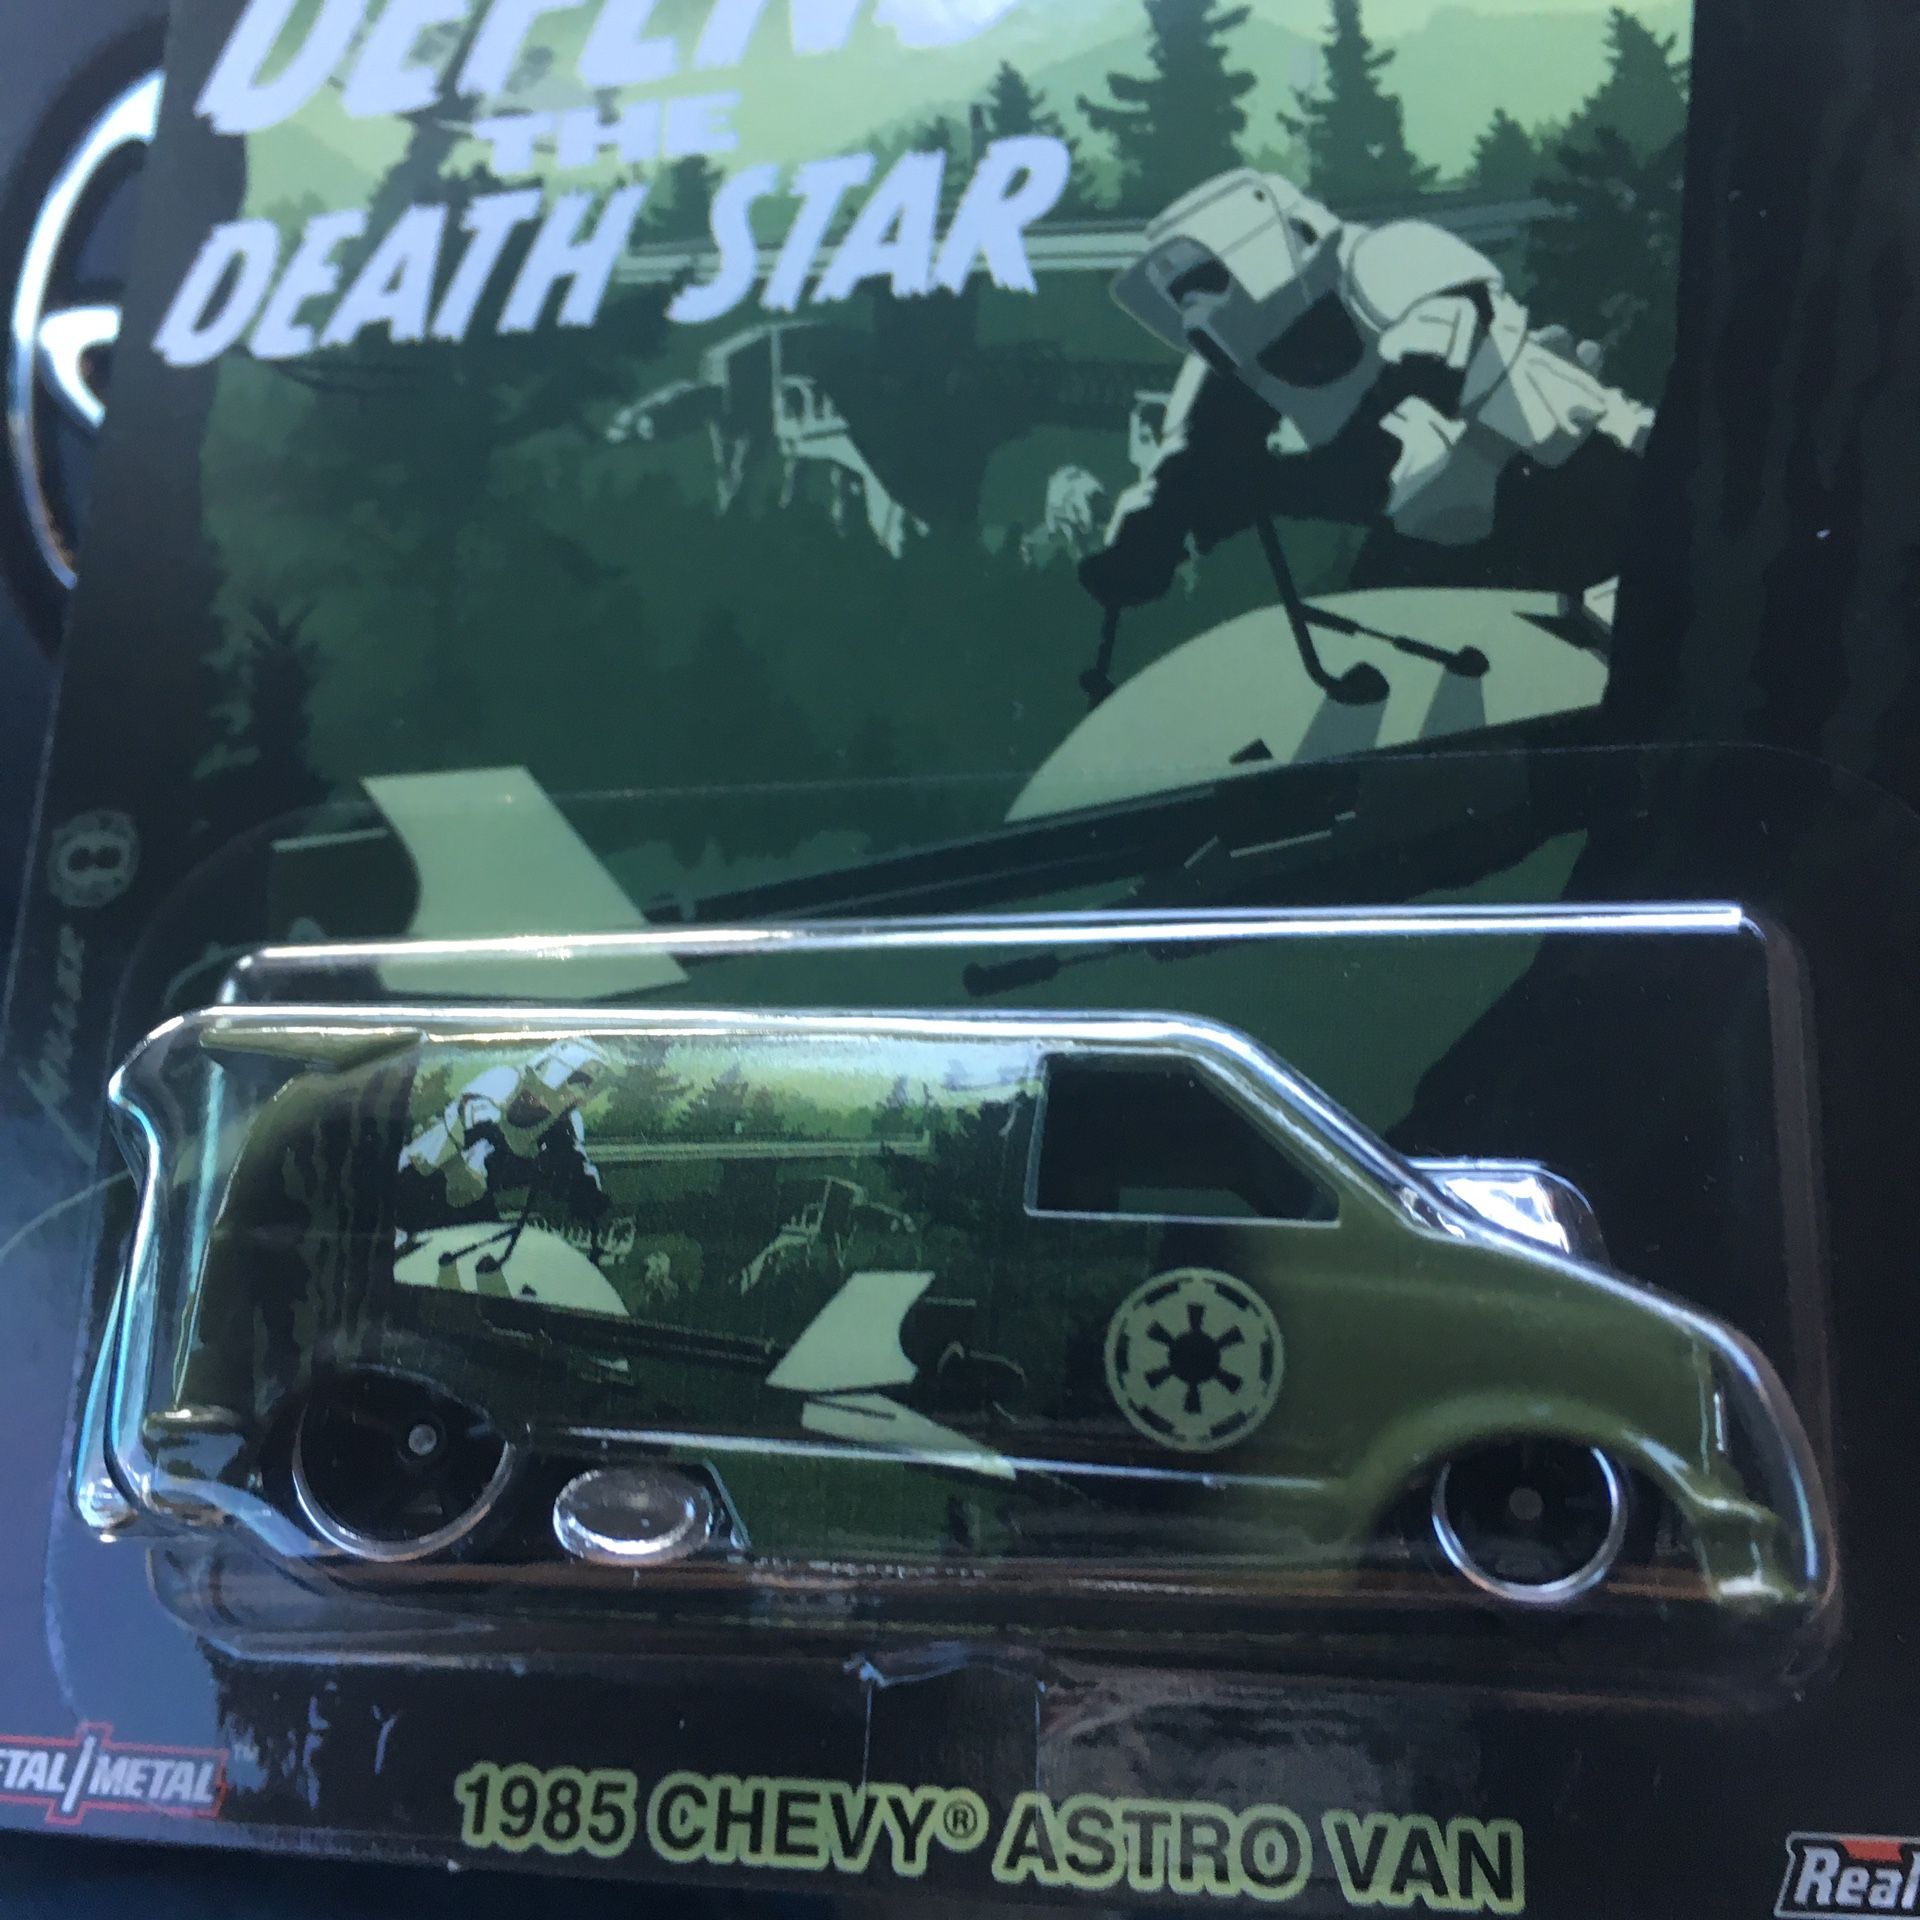 Hot wheels Star Wars 85 Chevy Astro van drag racing collectible die cast toy car $15 obo trade Hotwheels honda Mazda Nissan datsun Civic crx integra